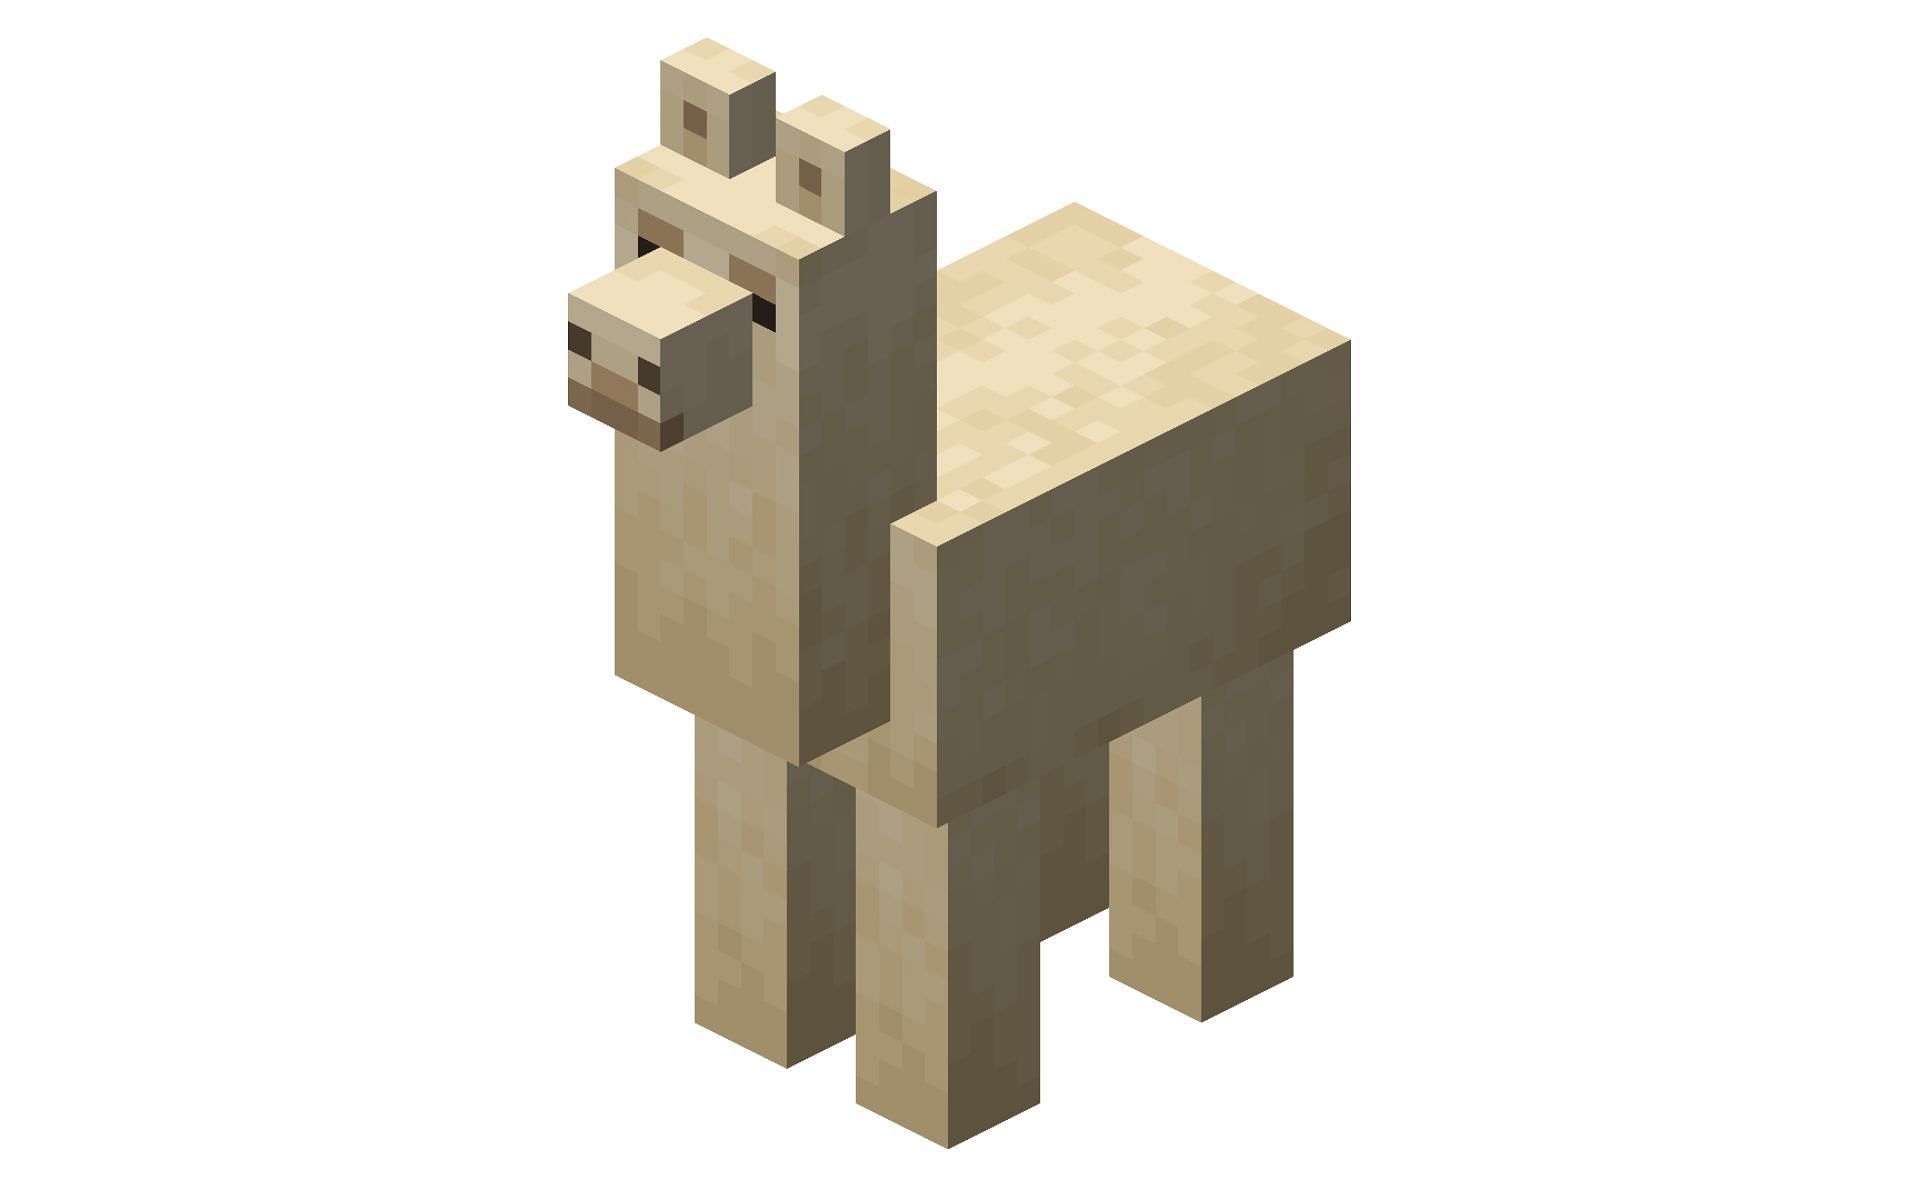 In-game model of the Llama (Image via Fandom)